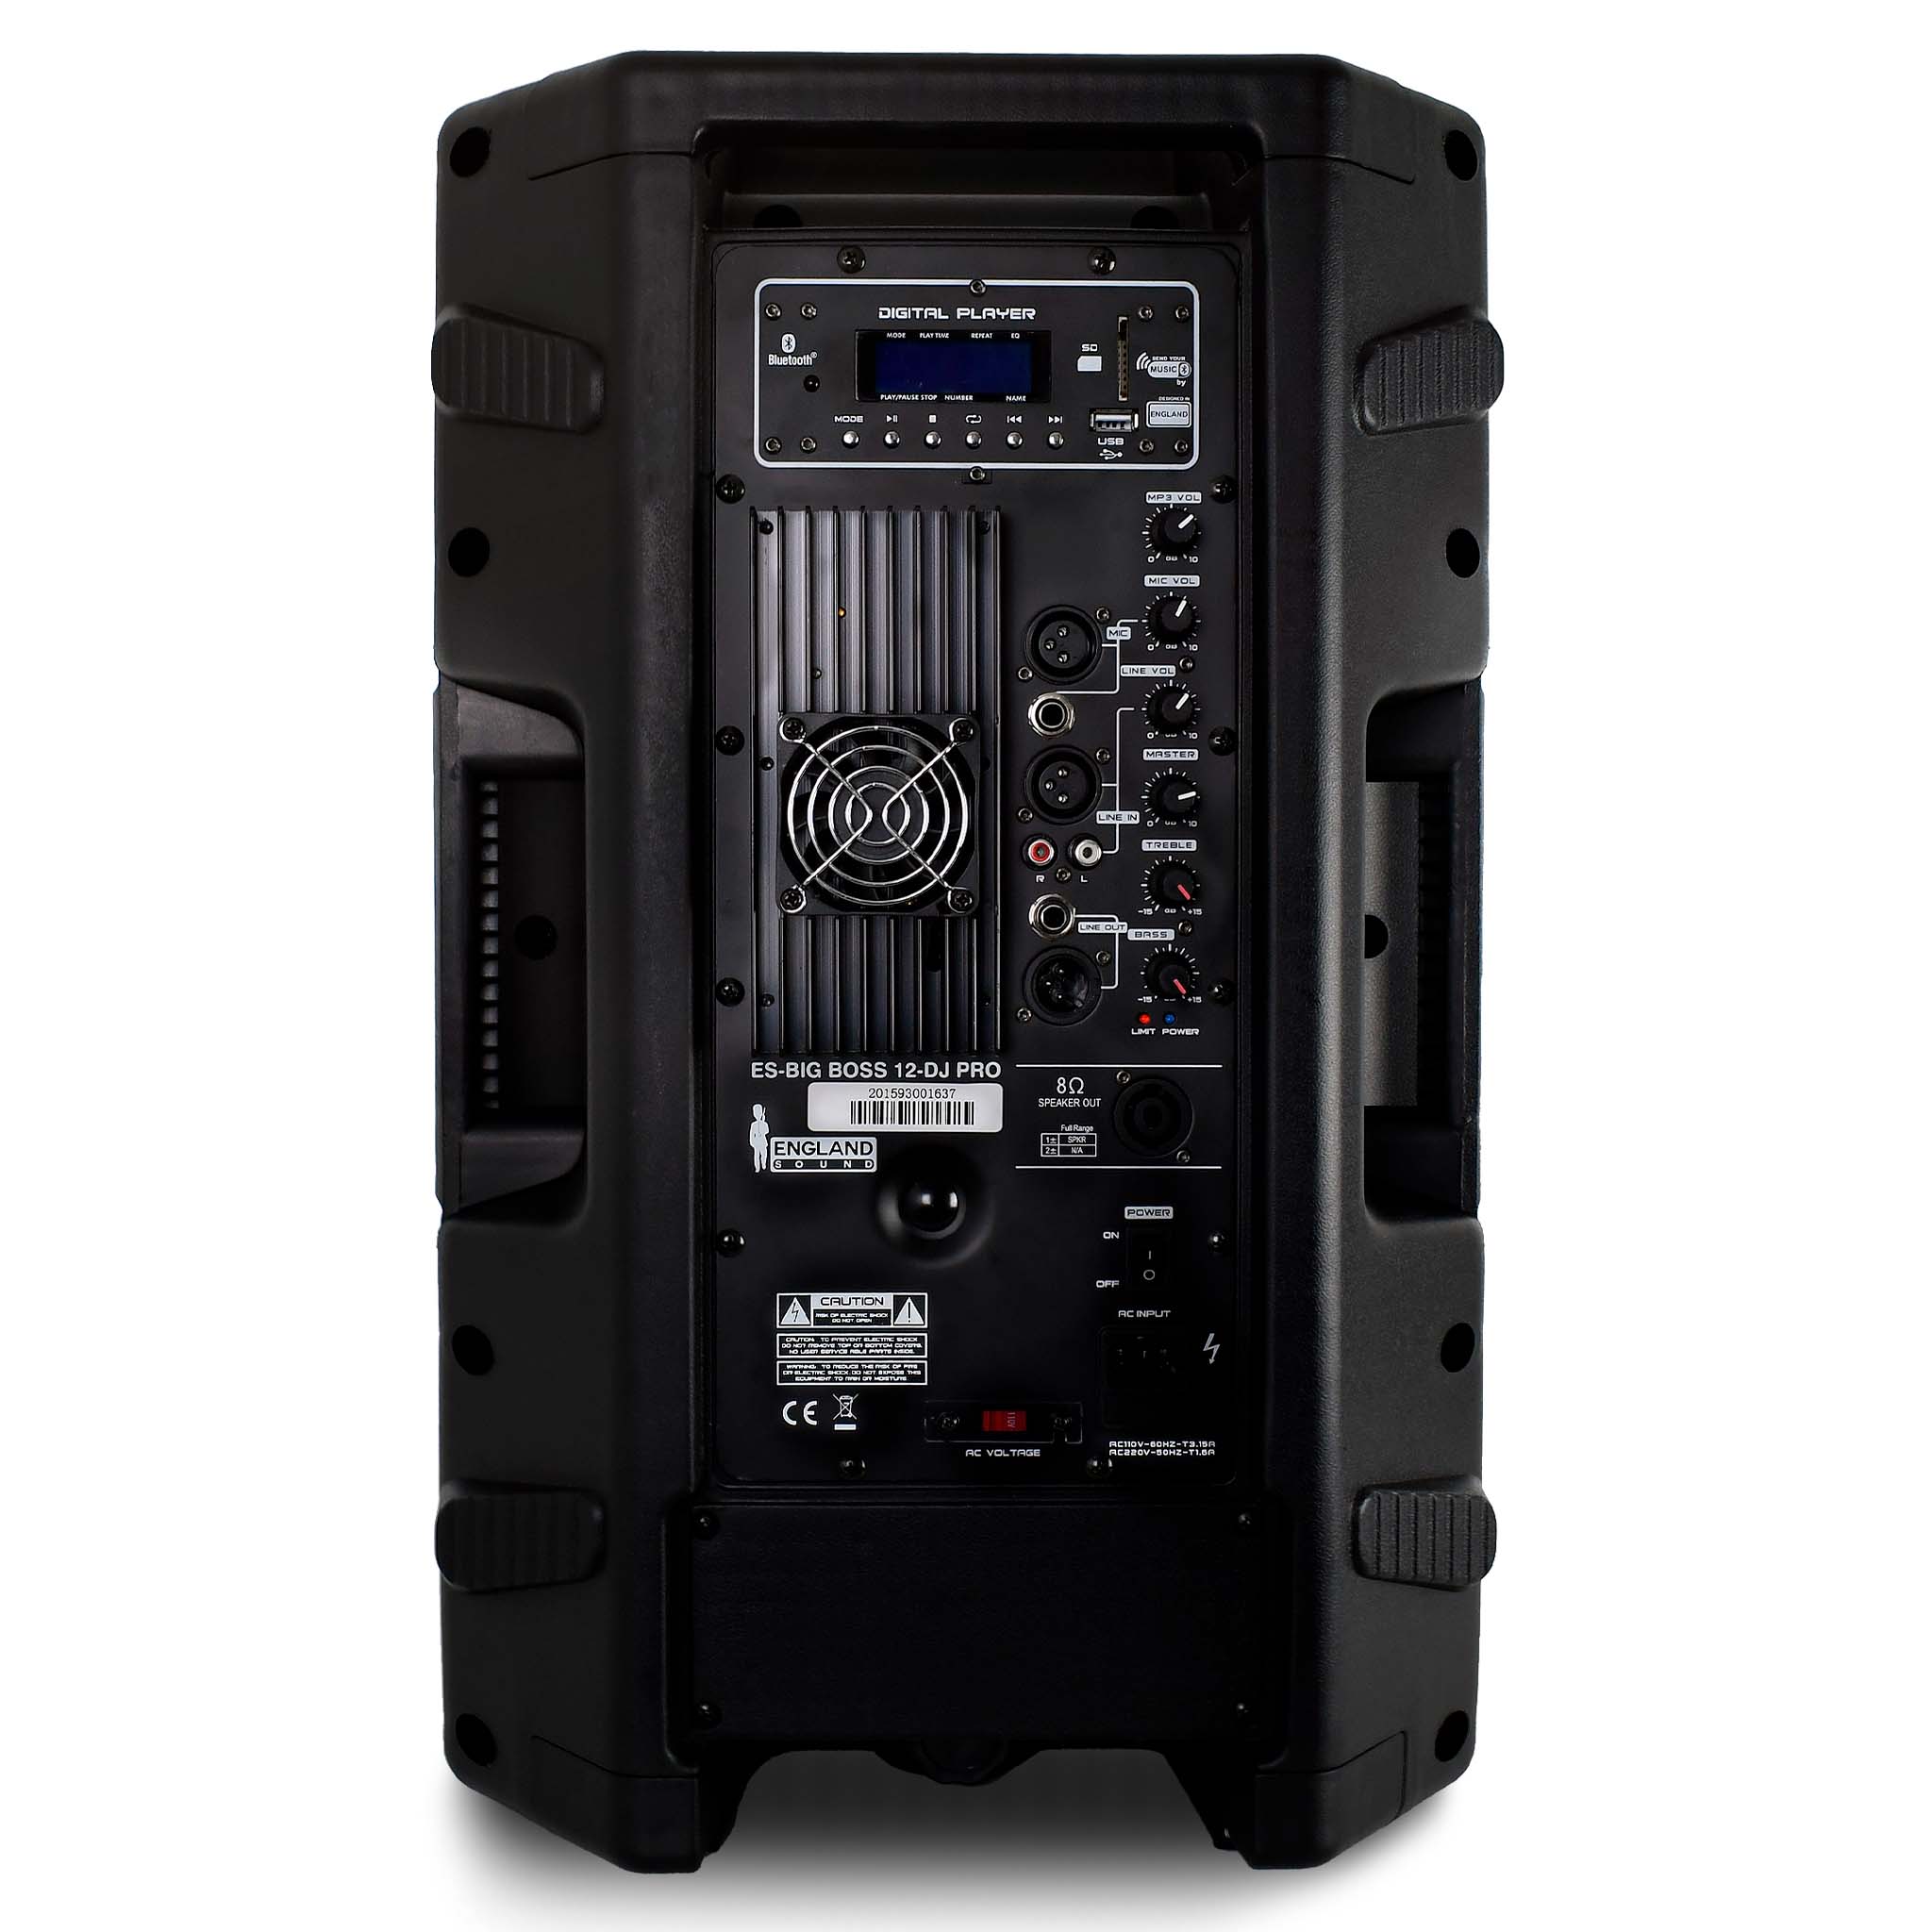 Caja Activa 10 Clase AB 200W RMS Bluetooth ENGLAND SOUND ES-10 DJ-PRO